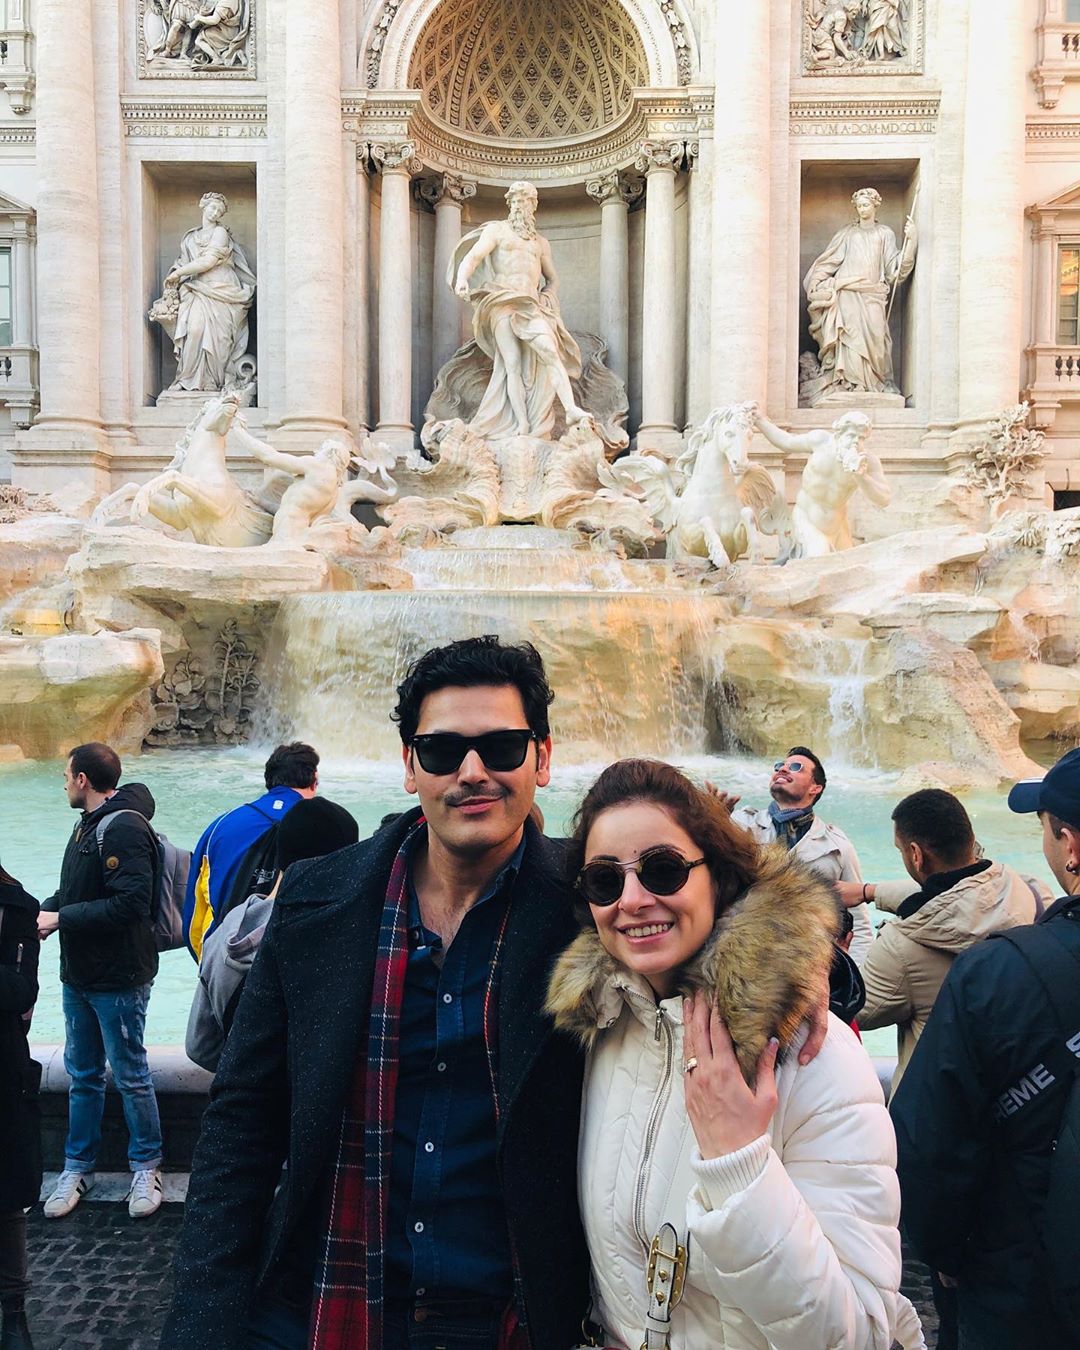 Beautiful Couple Fahad Mirza and Sarwat Gilani Enjoying Vacations in Rome